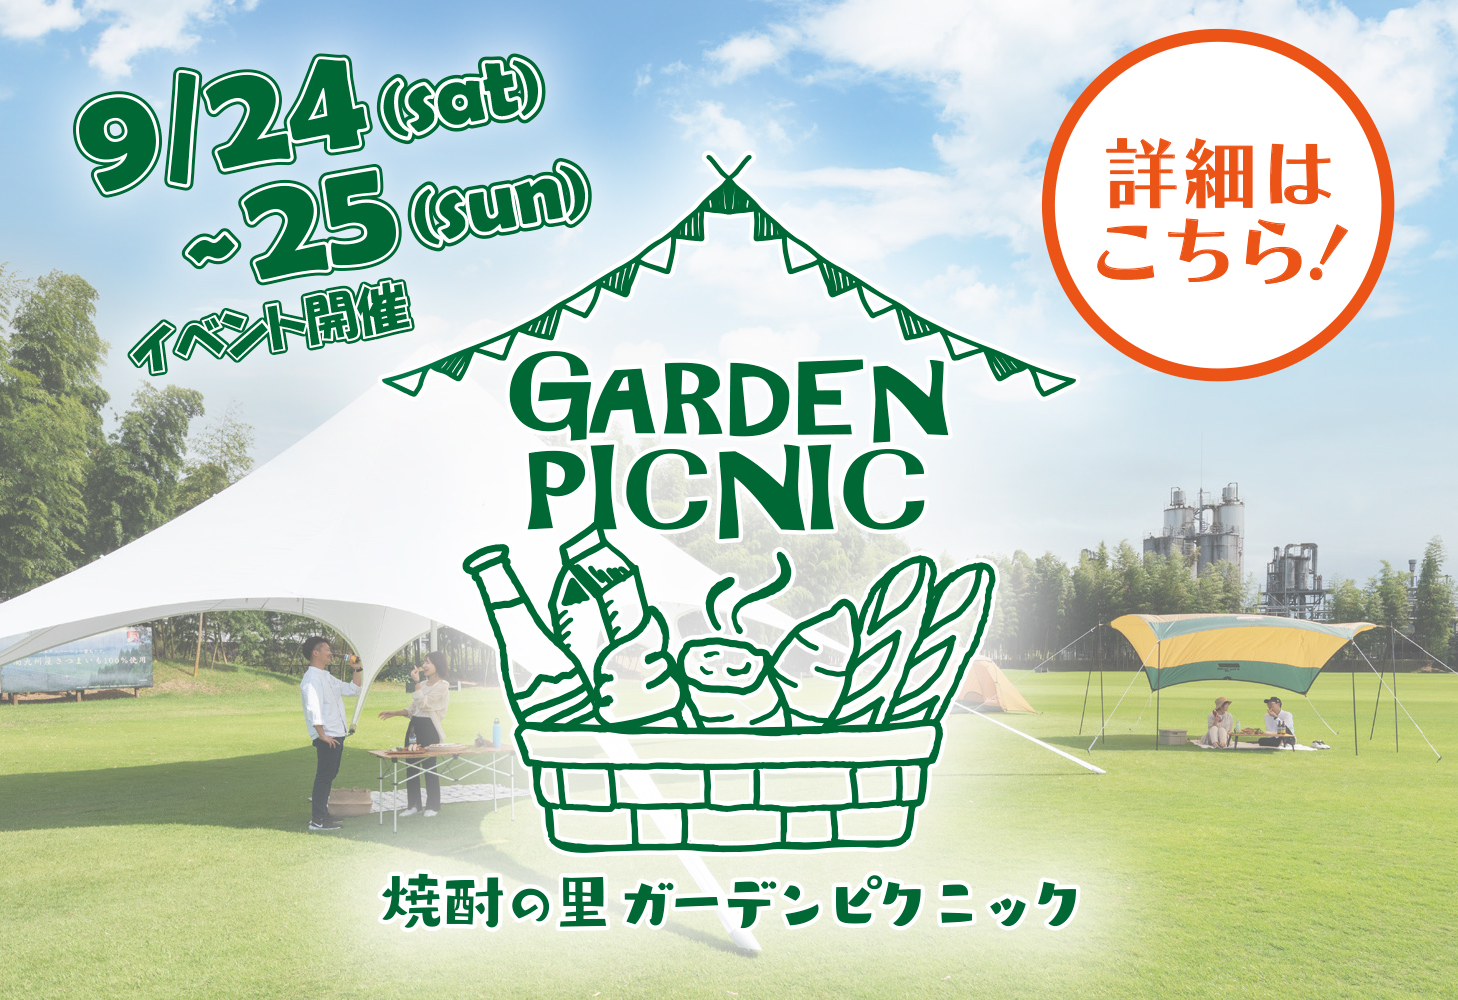 9/24(sat)〜25(sun) イベント開催 GARDEN PICNIC 焼酎の里 ガーデンピクニック 詳細はこちら！